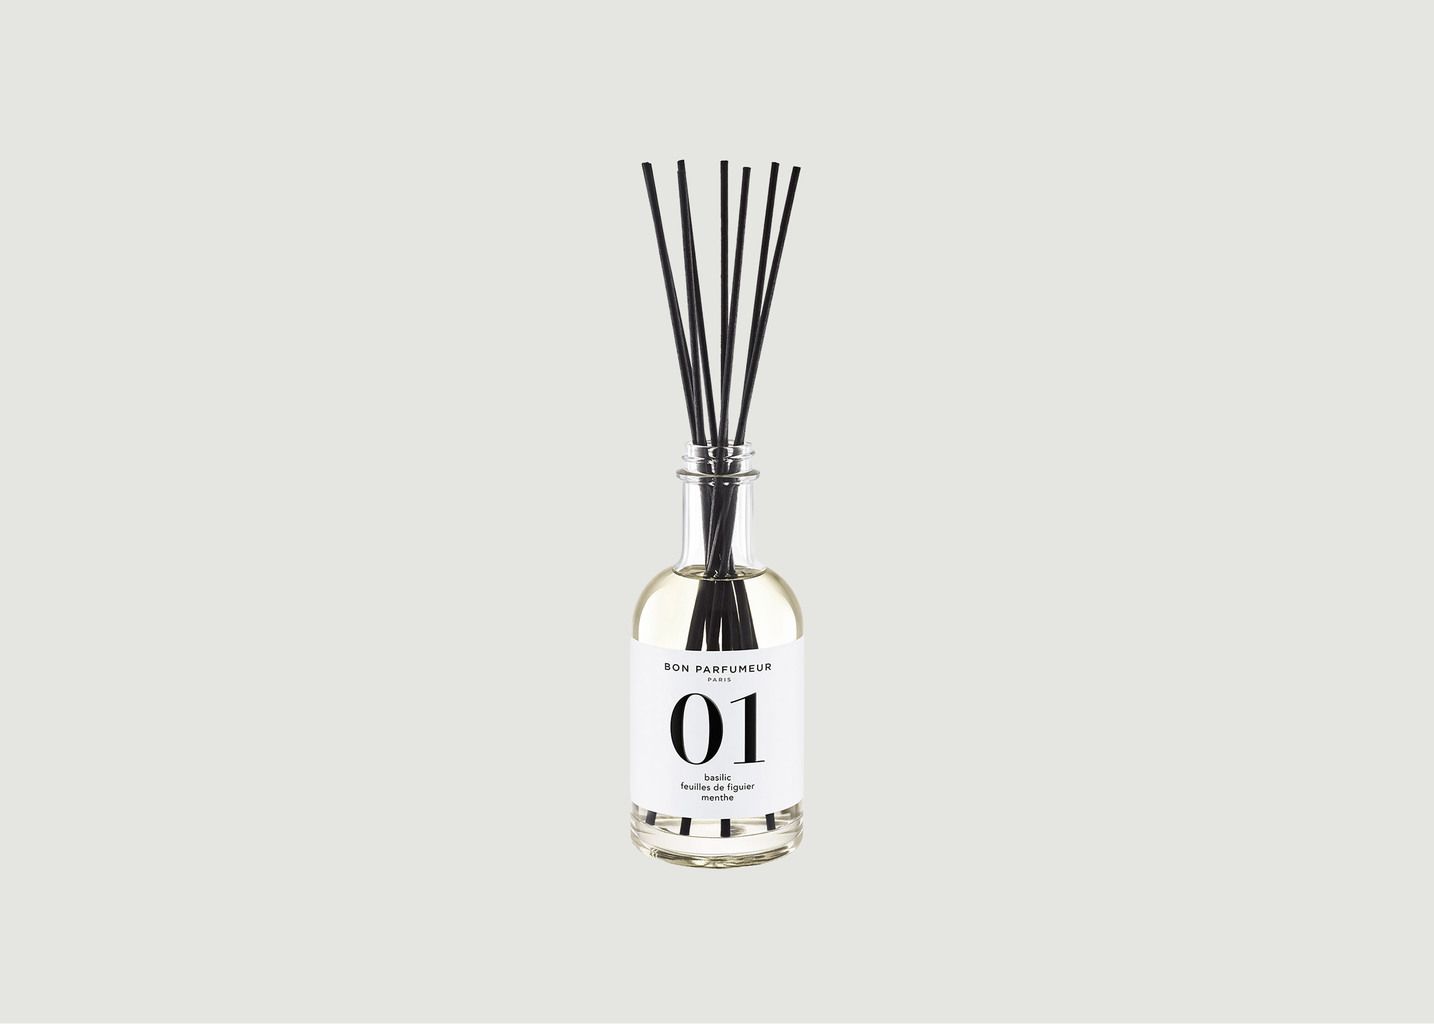 Bon Parfumeur Home Diffuser 01 : Basil, Fig Leaves And Mint